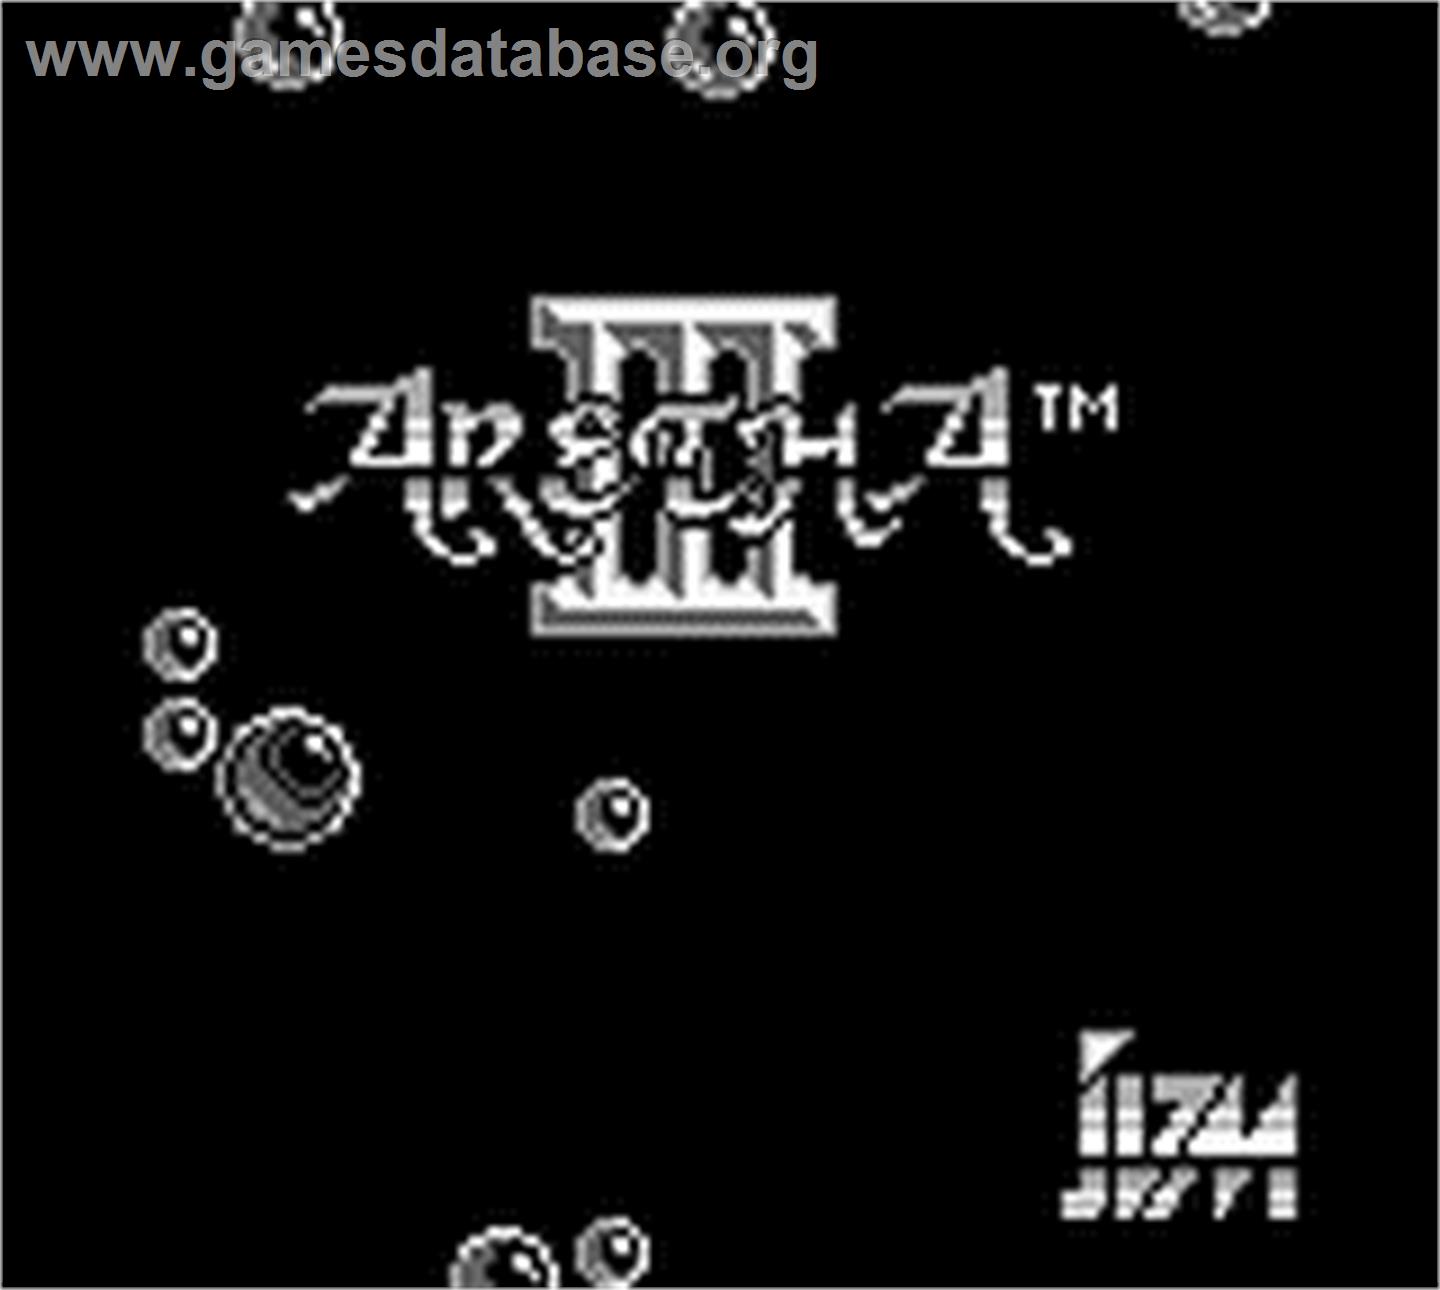 Aretha 3 - Nintendo Game Boy - Artwork - Title Screen